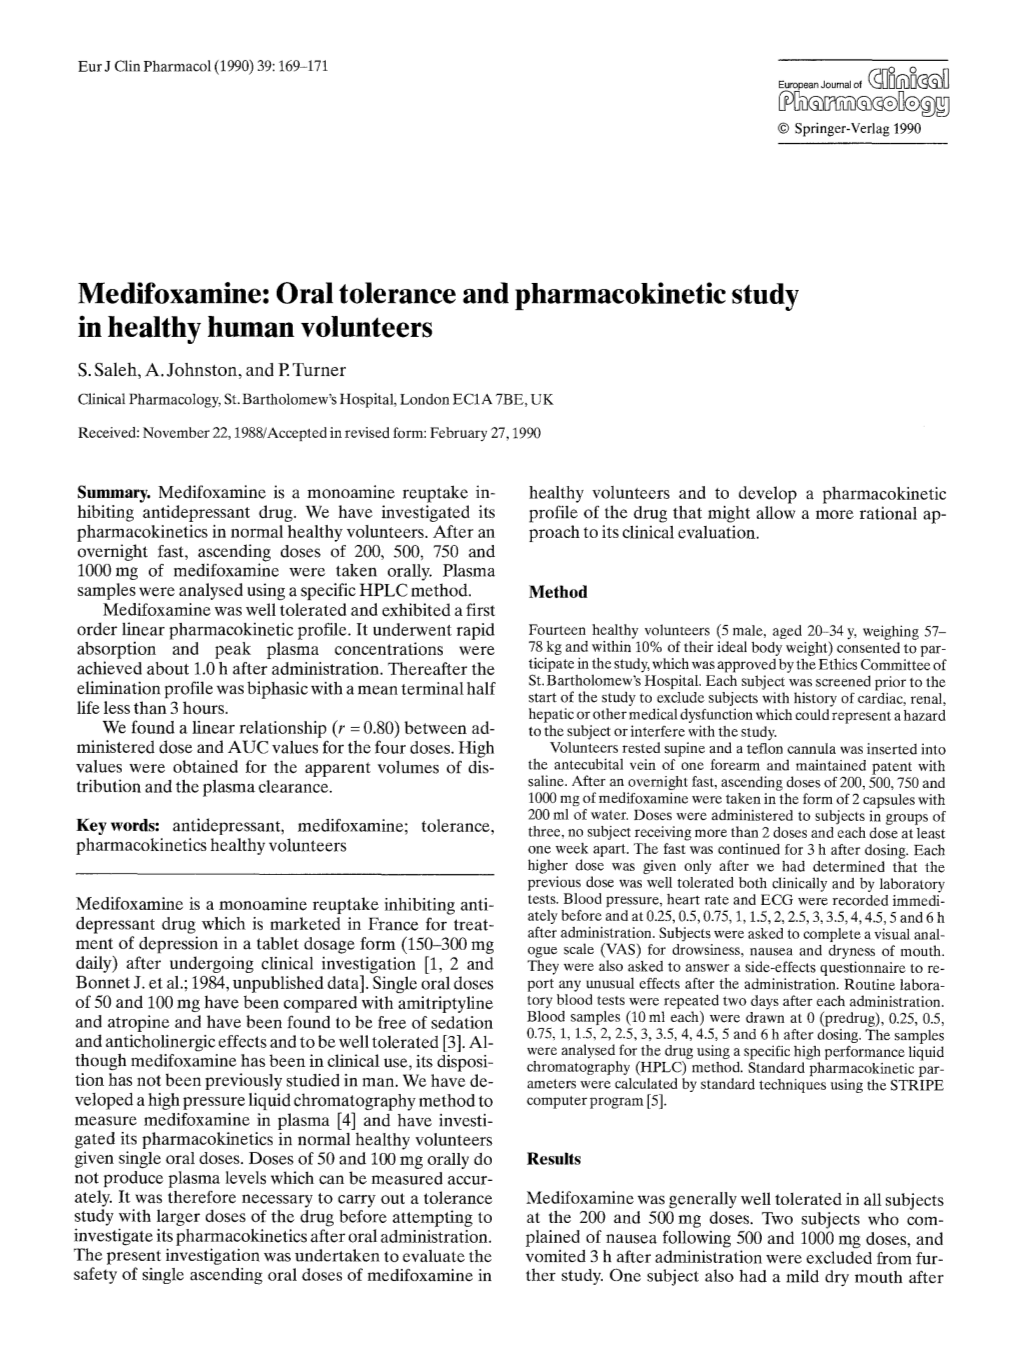 Medifoxamine: Oral Tolerance and Pharmacokinetic Study in Healthy Human Volunteers